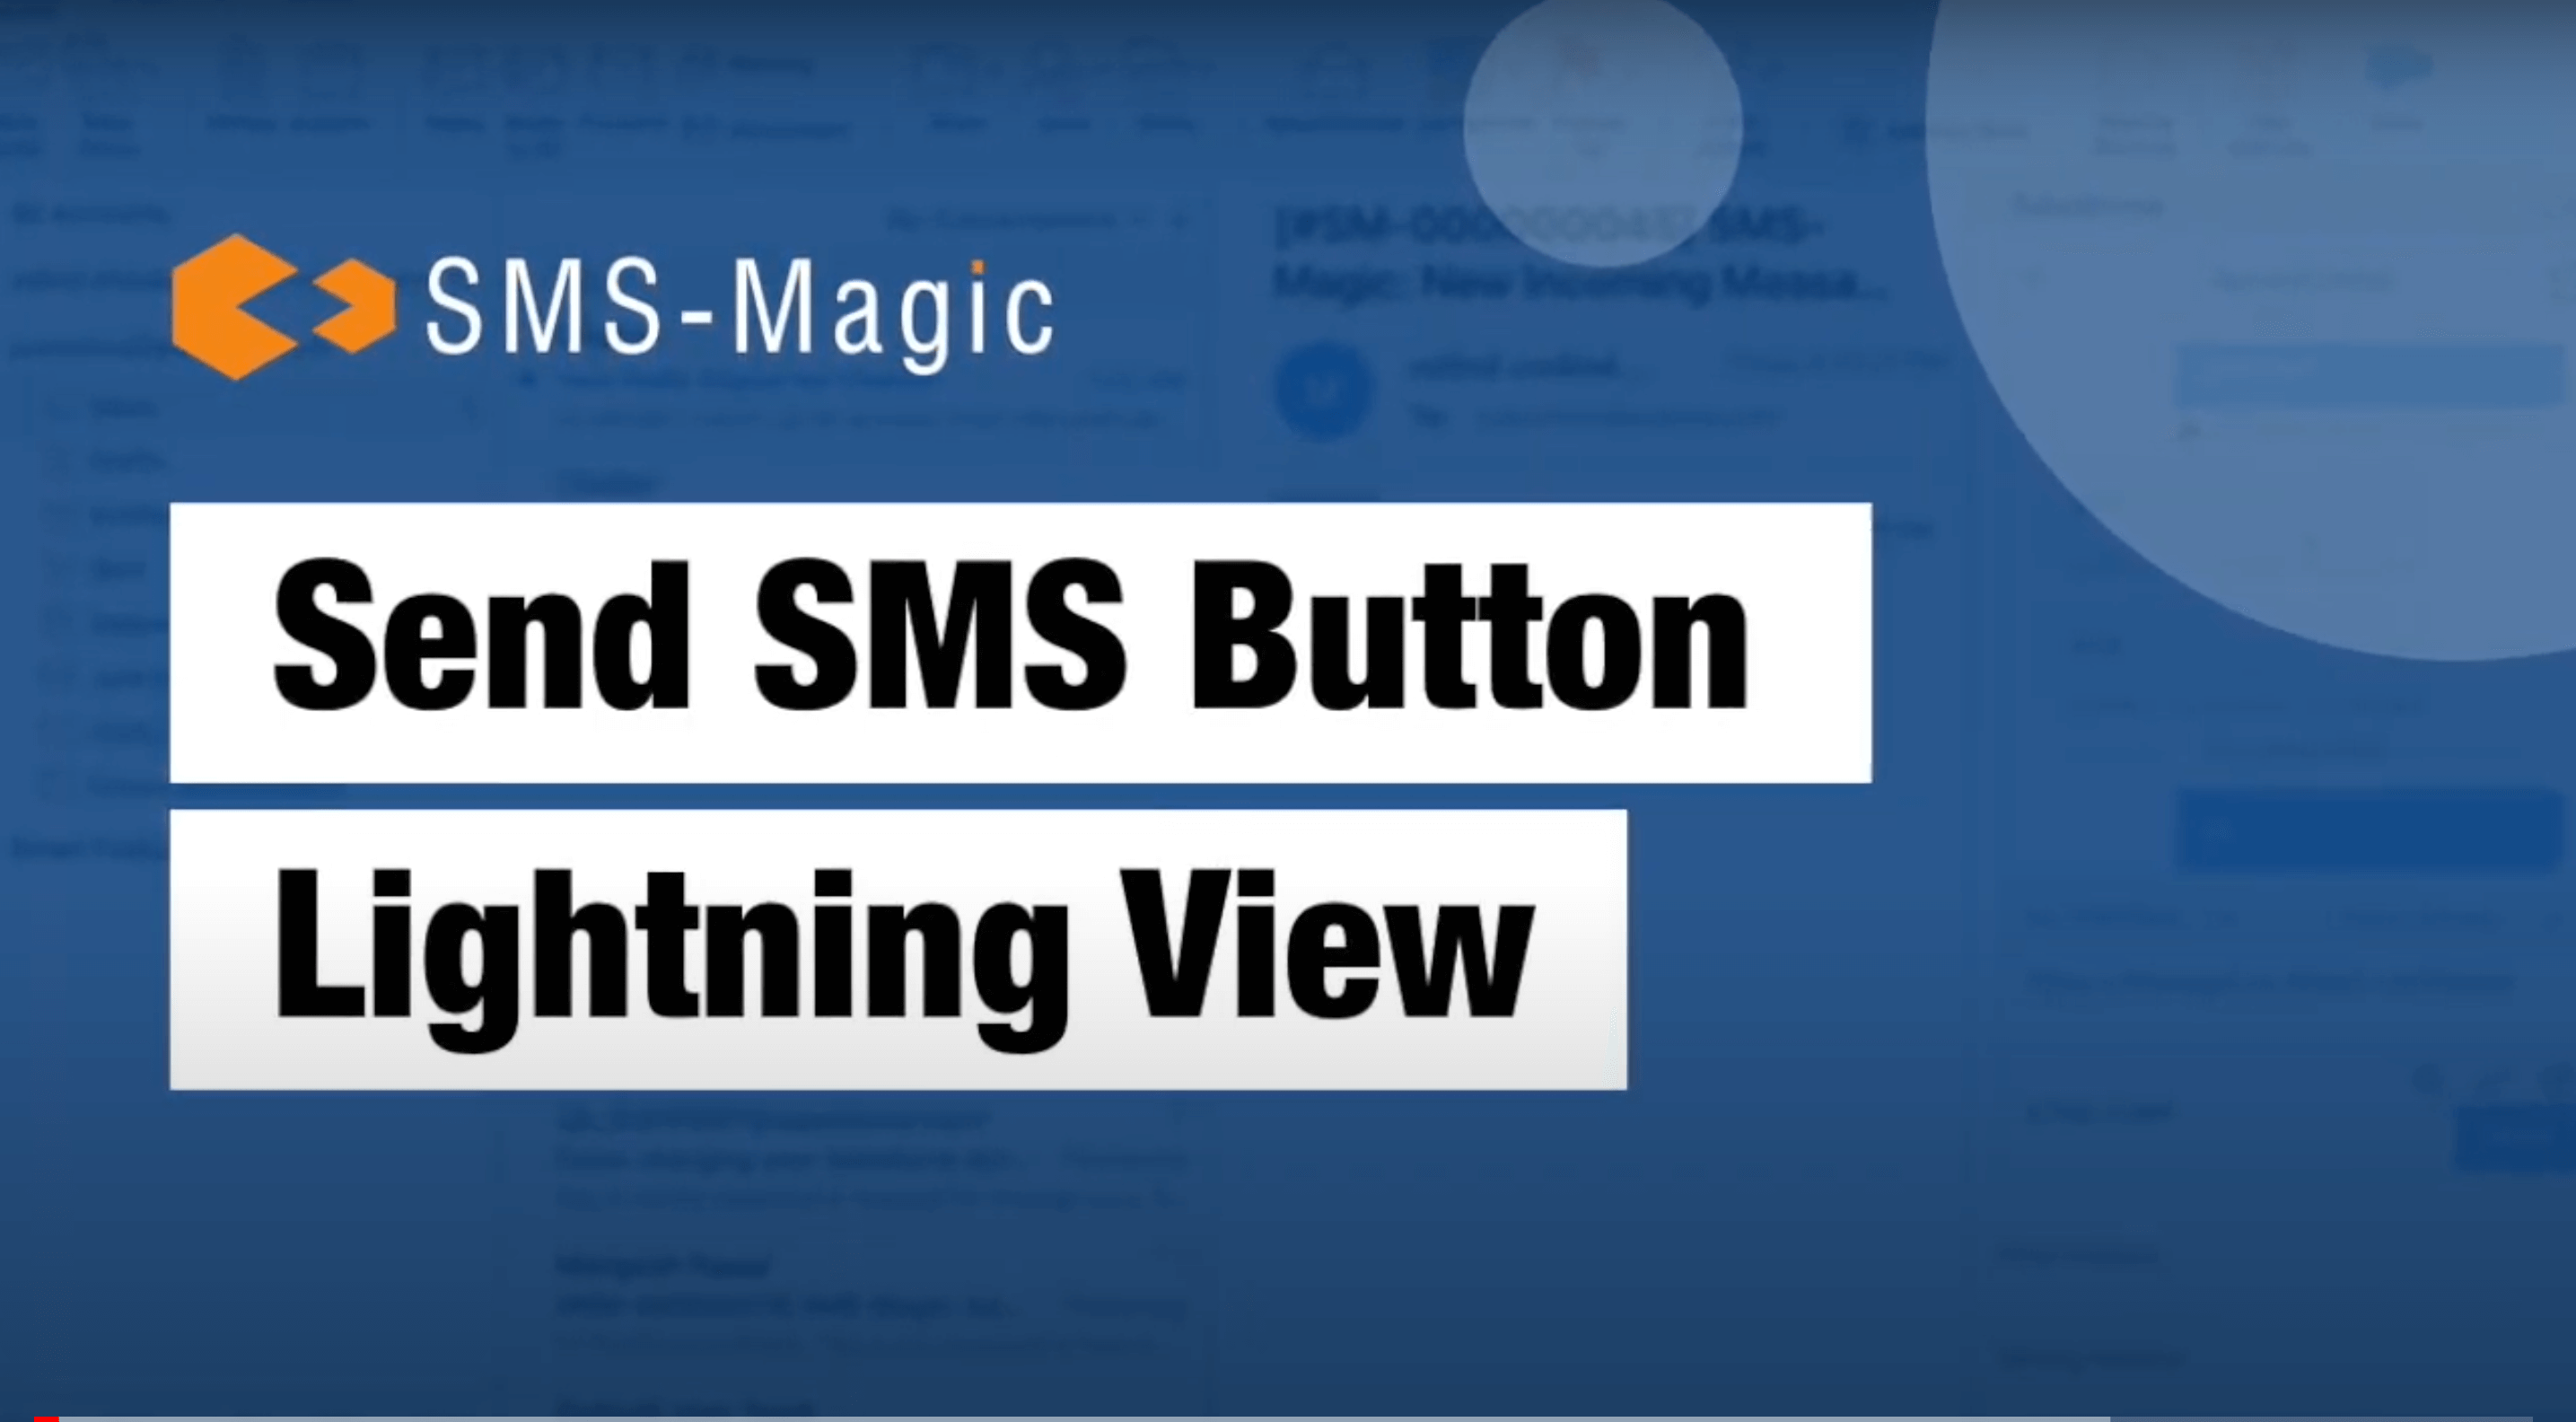 Send SMS Button Lightning View